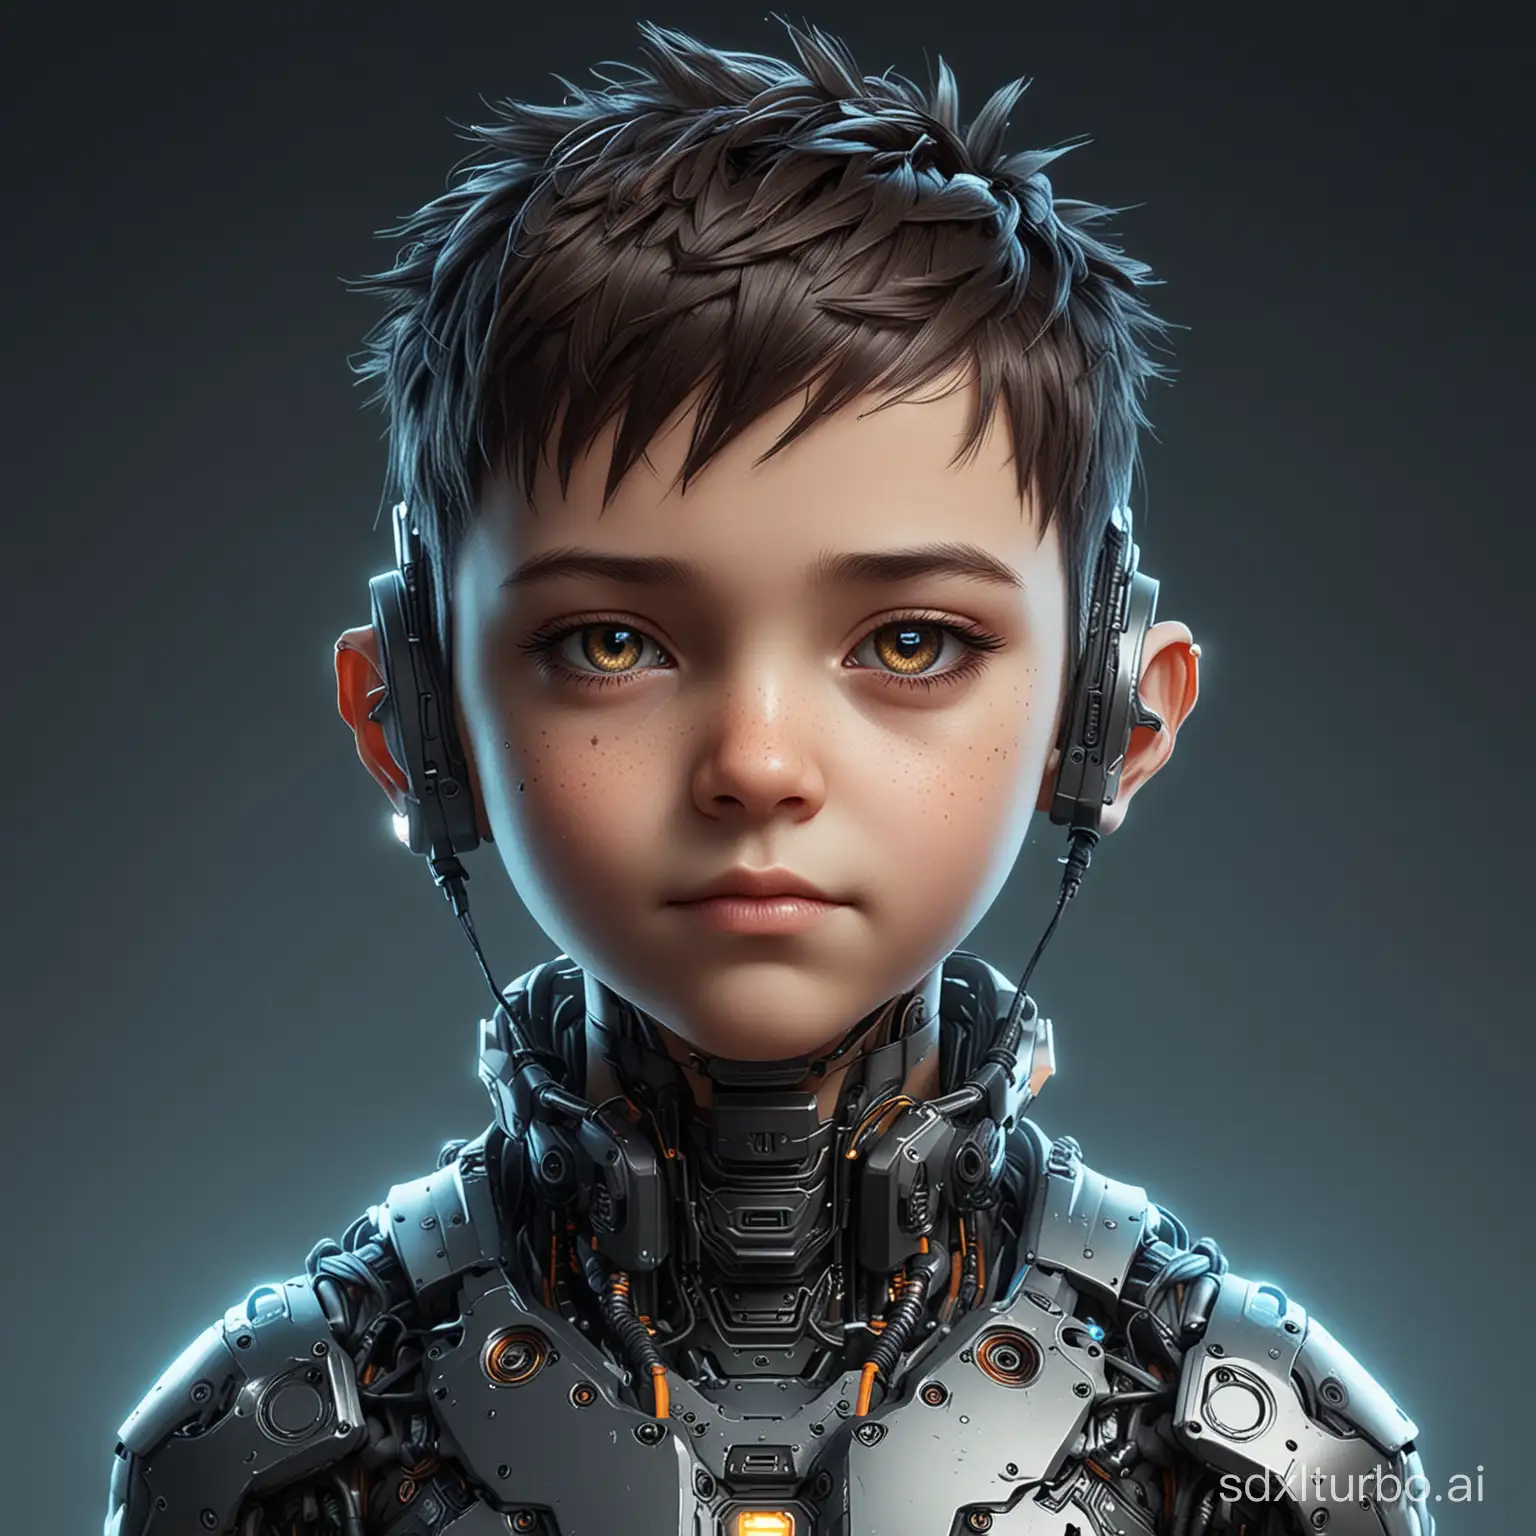 Little-Boy-with-Cyberpunk-Style-Robot-Avatar-in-HighQuality-Digital-Art